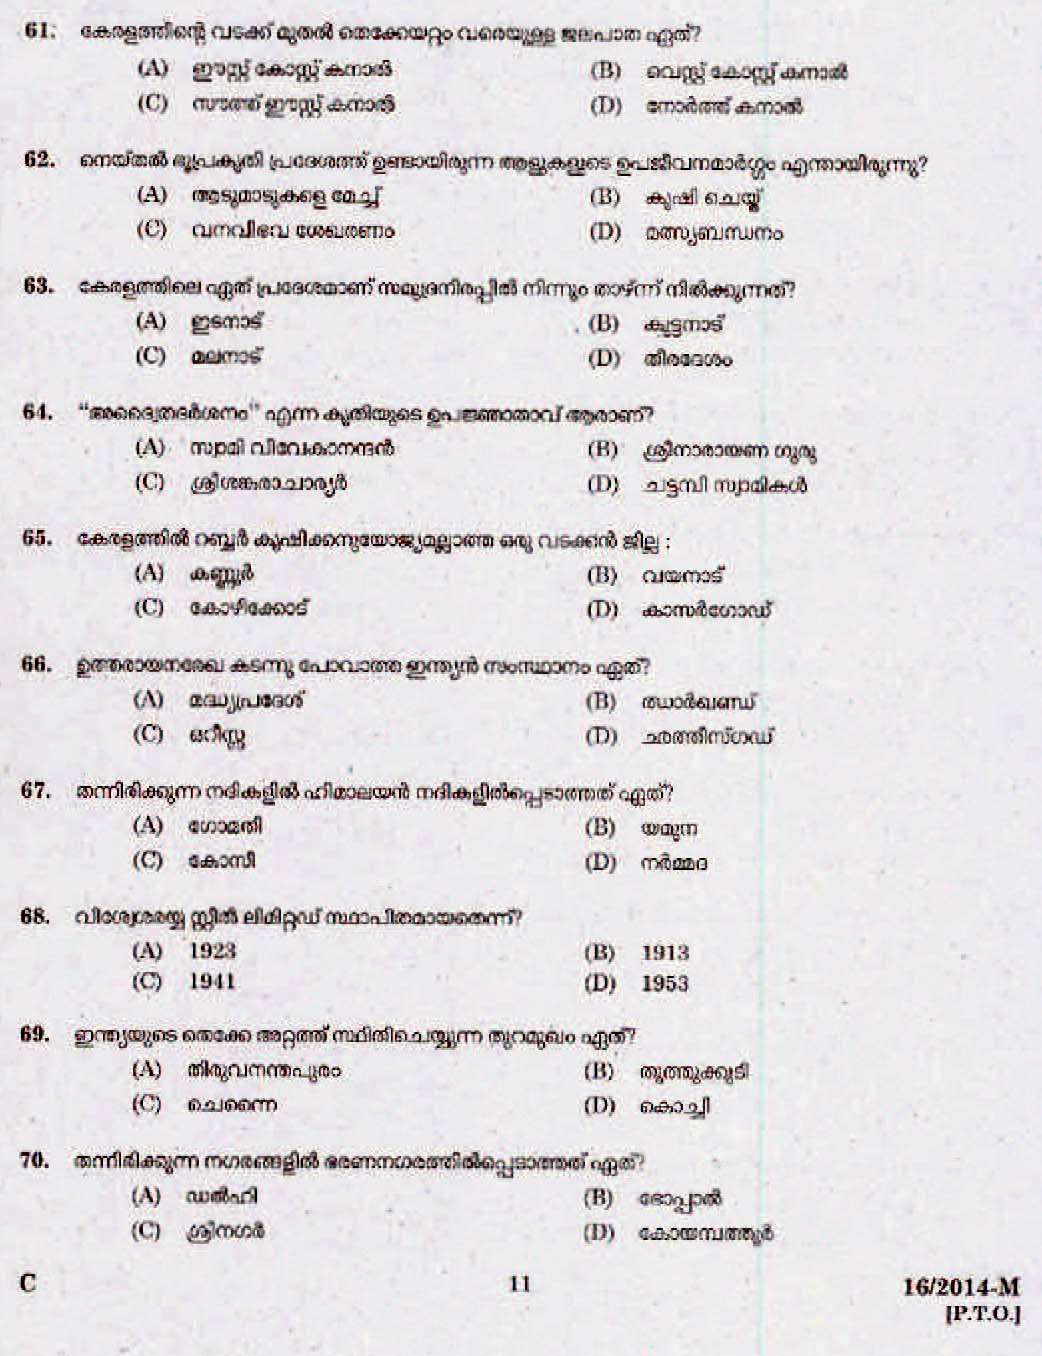 LD Clerk Kottayam Question Paper Malayalam 2014 Paper Code 162014 M 10